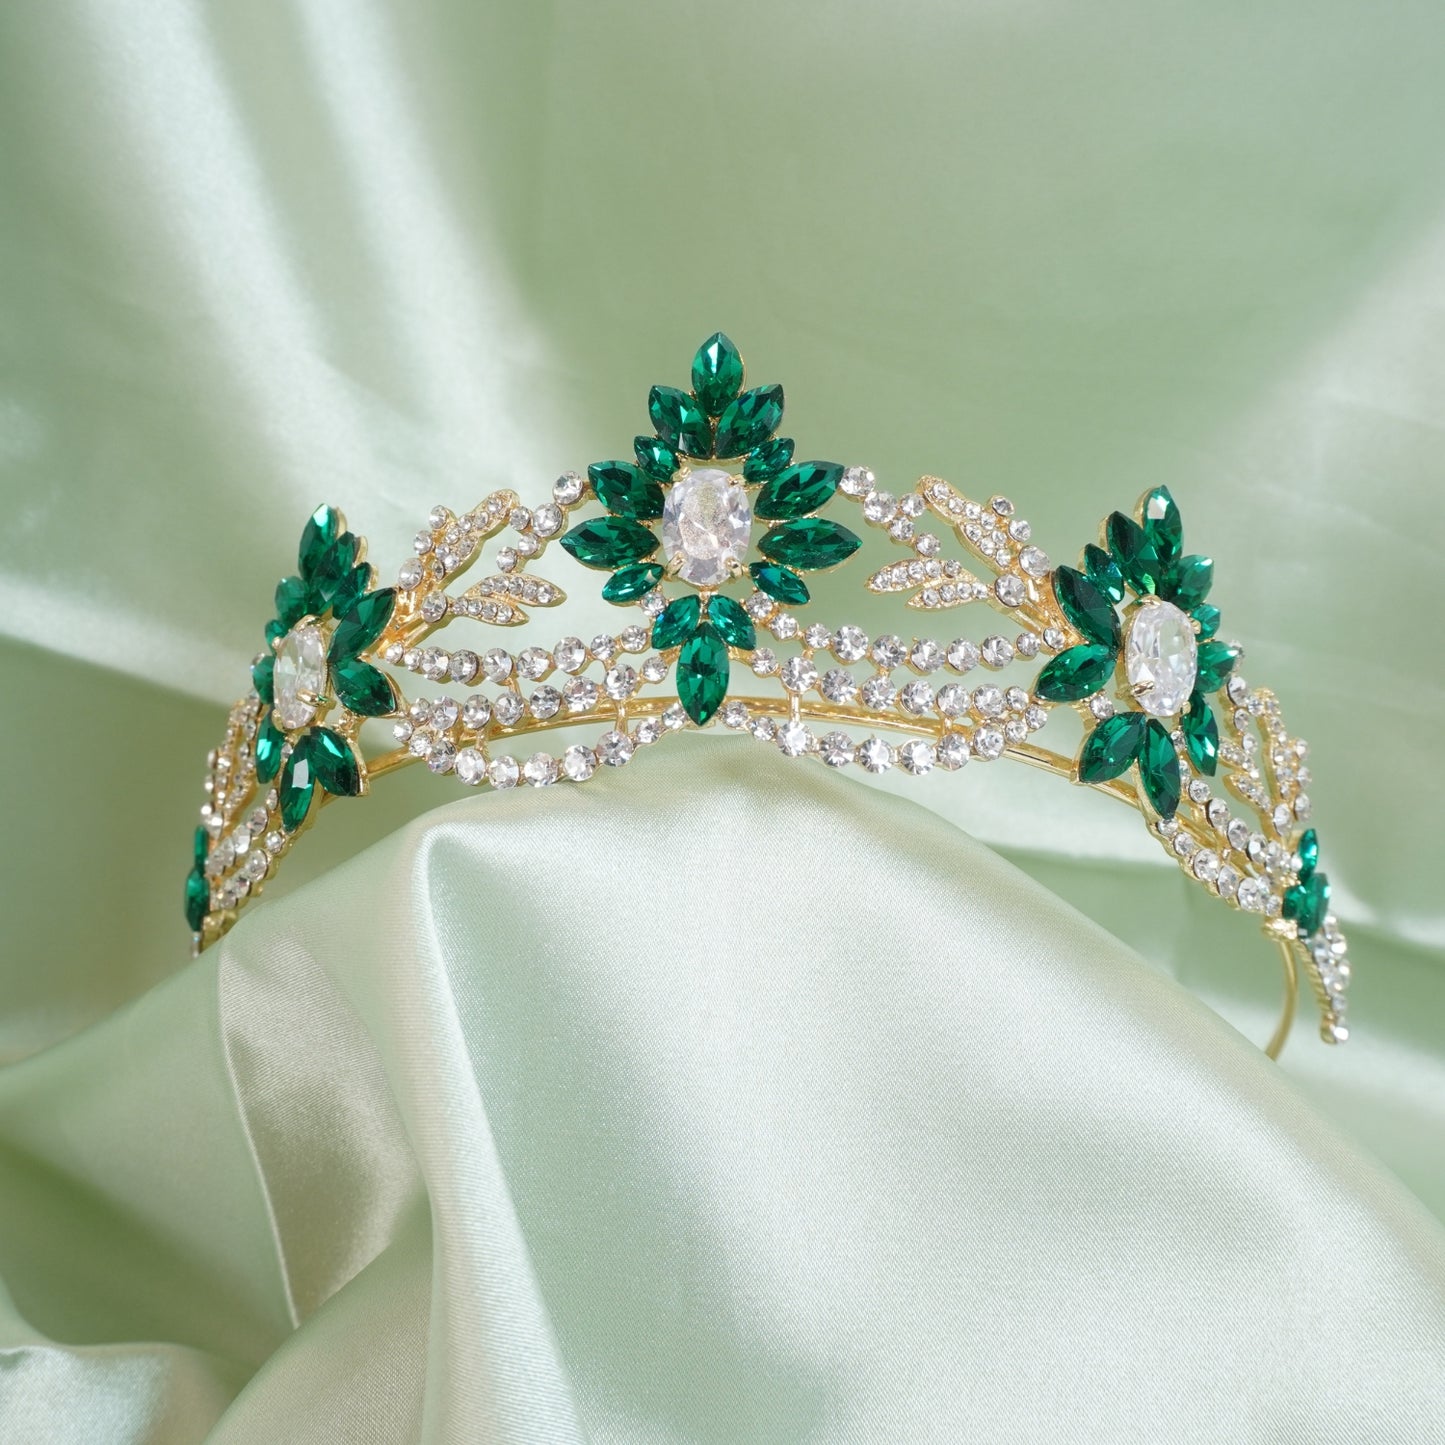 Queen Crystal Crown Bridal Tiaras and Crowns for Women, Crystal Crown Vintage Princess Tiara Rhinestone Green